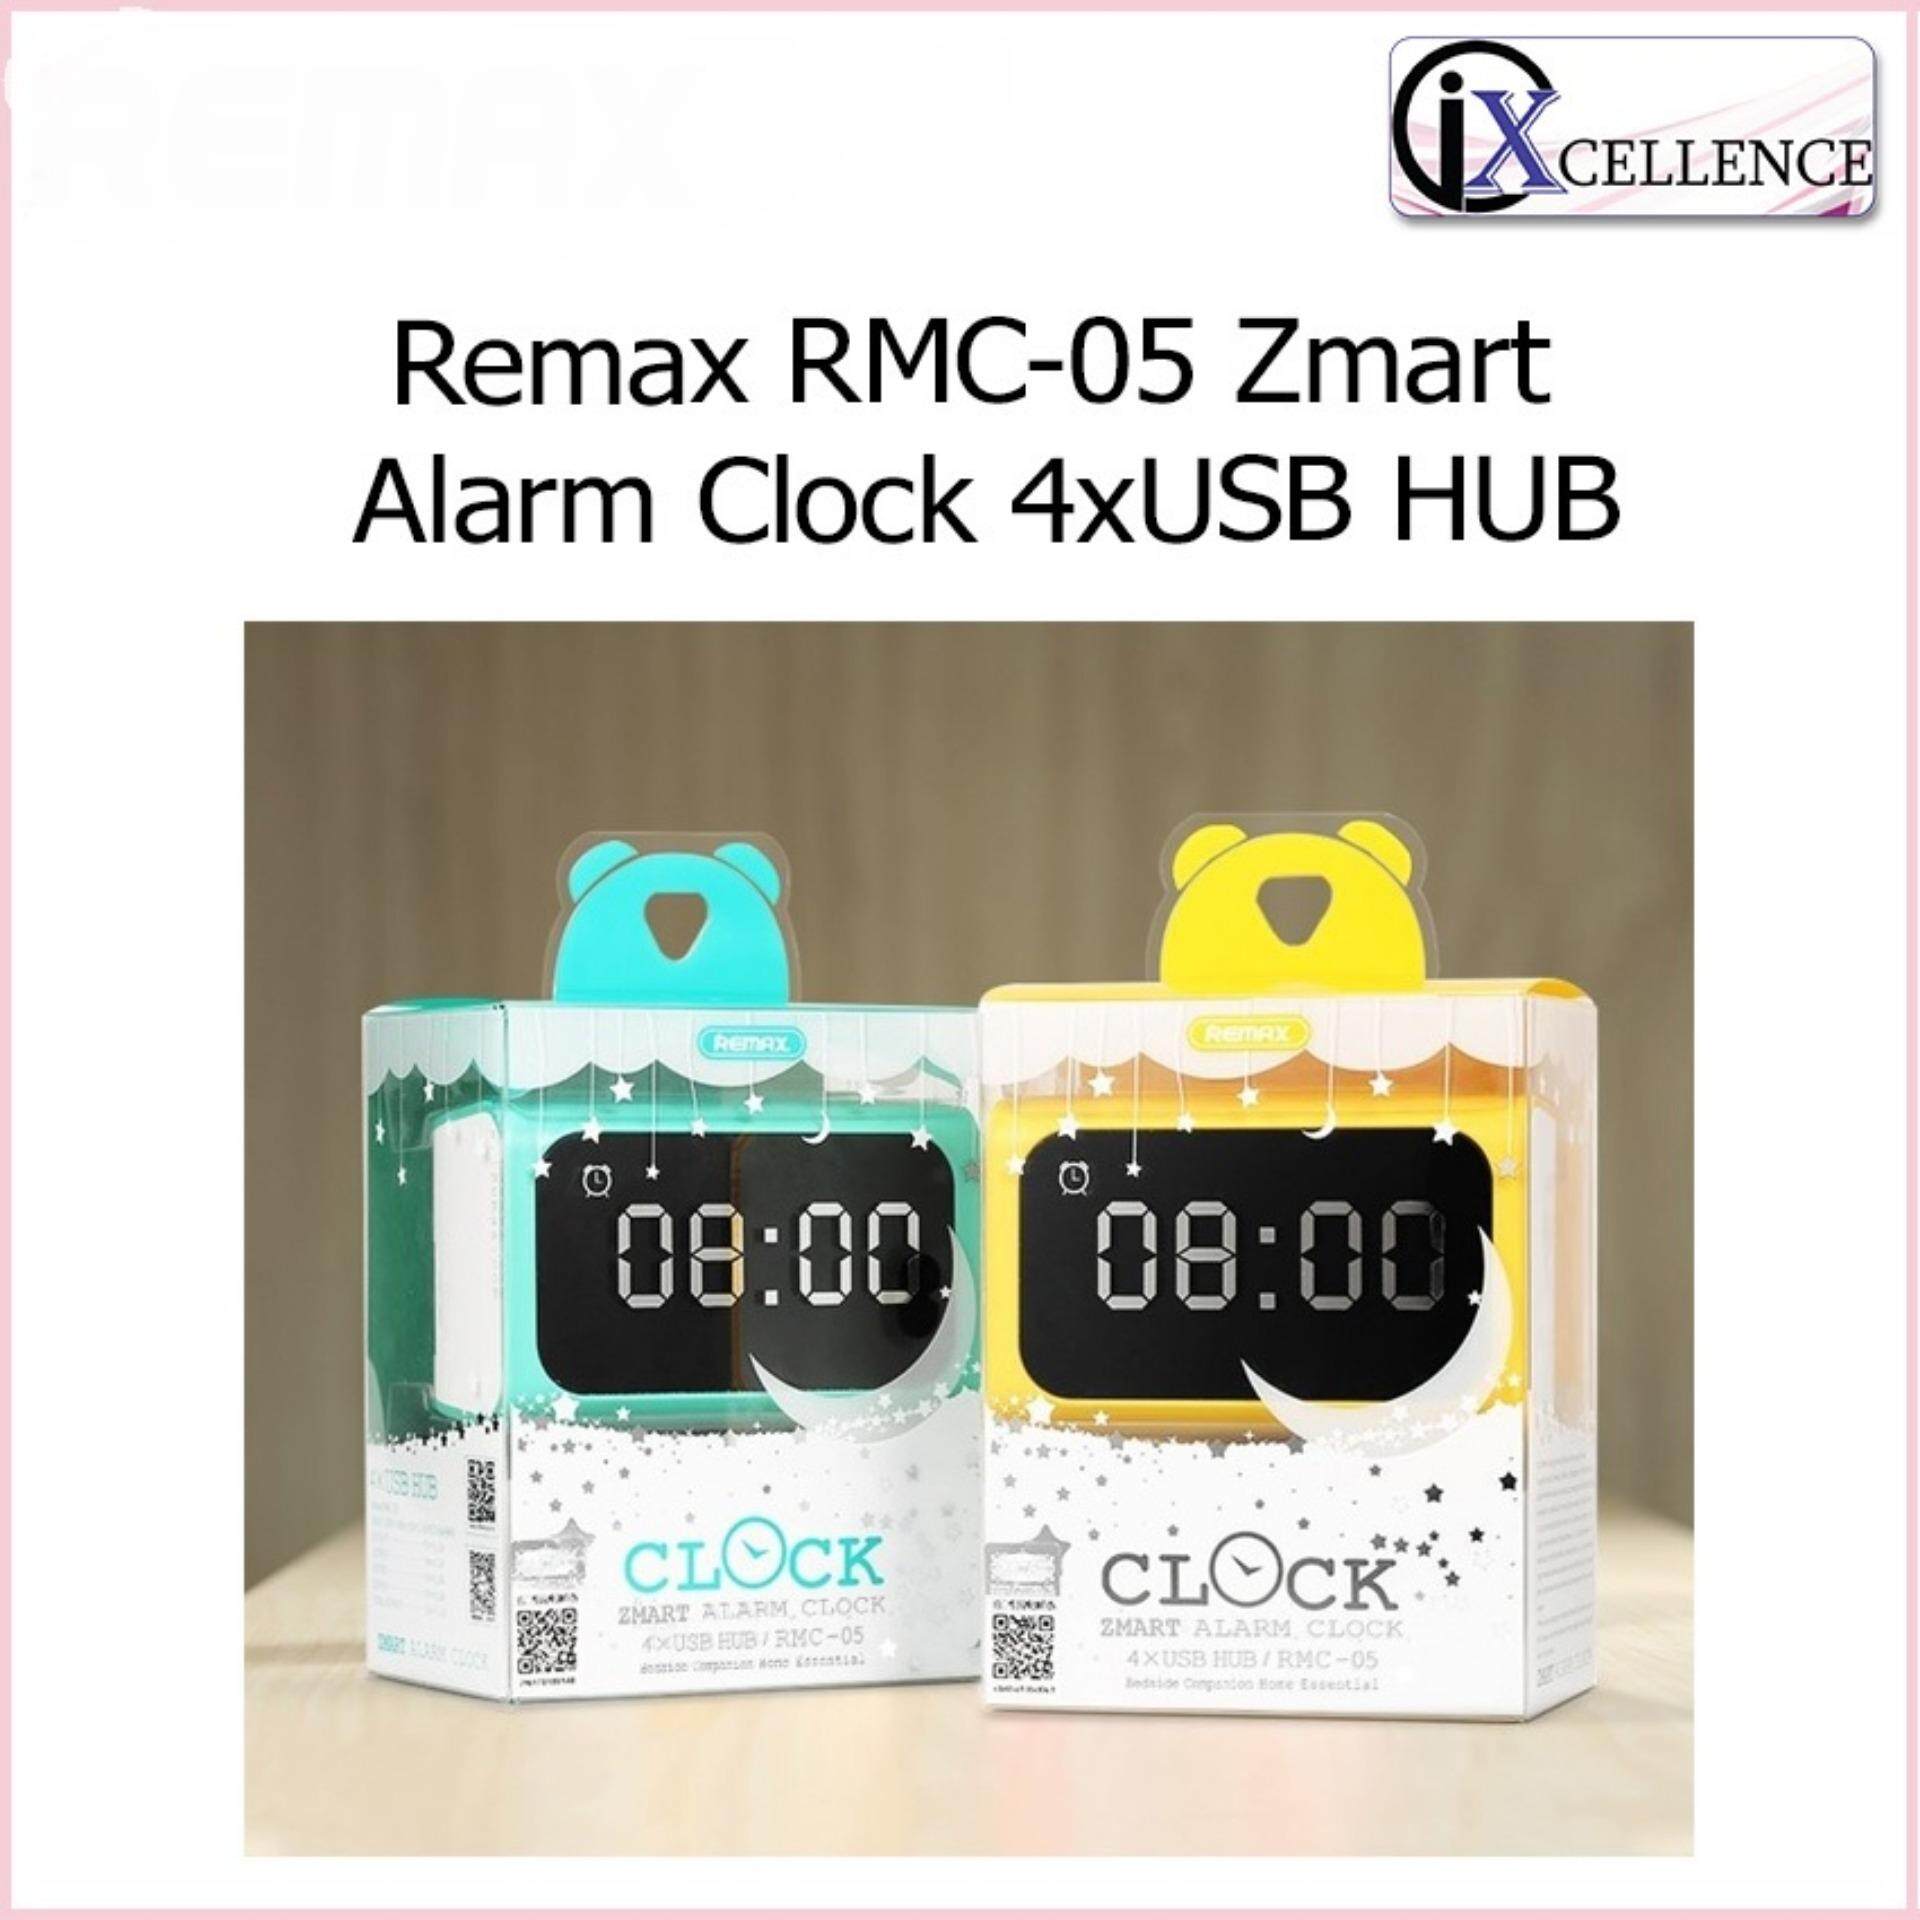 [IX] Remax RM-C05 Zmart Alarm Clock 4xUSB HUB